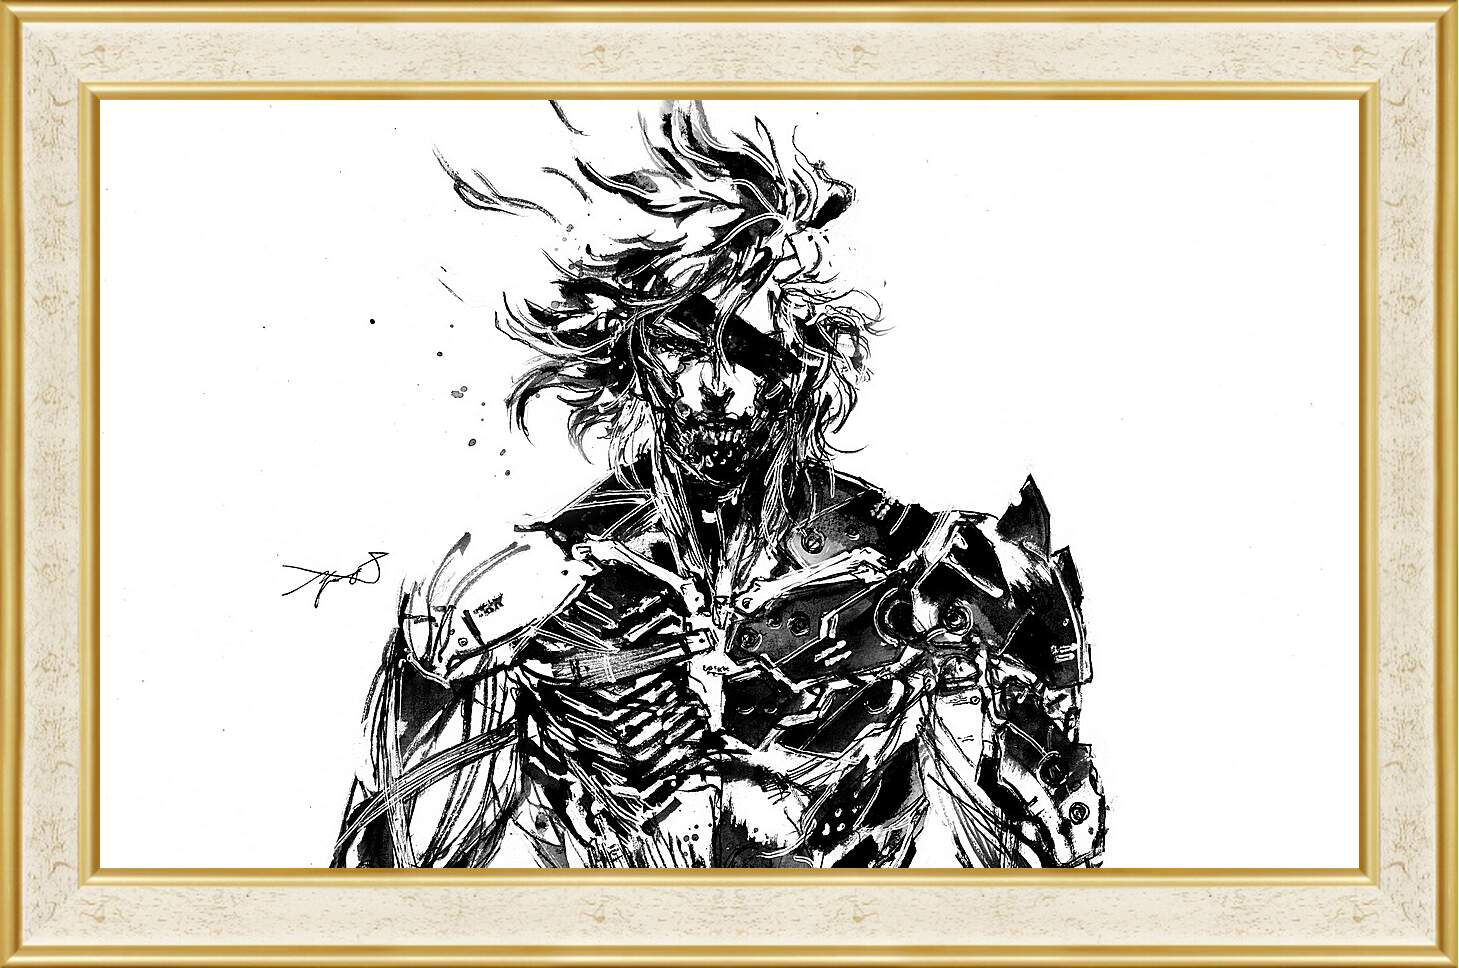 Картина в раме - Metal Gear Rising: Revengeance
